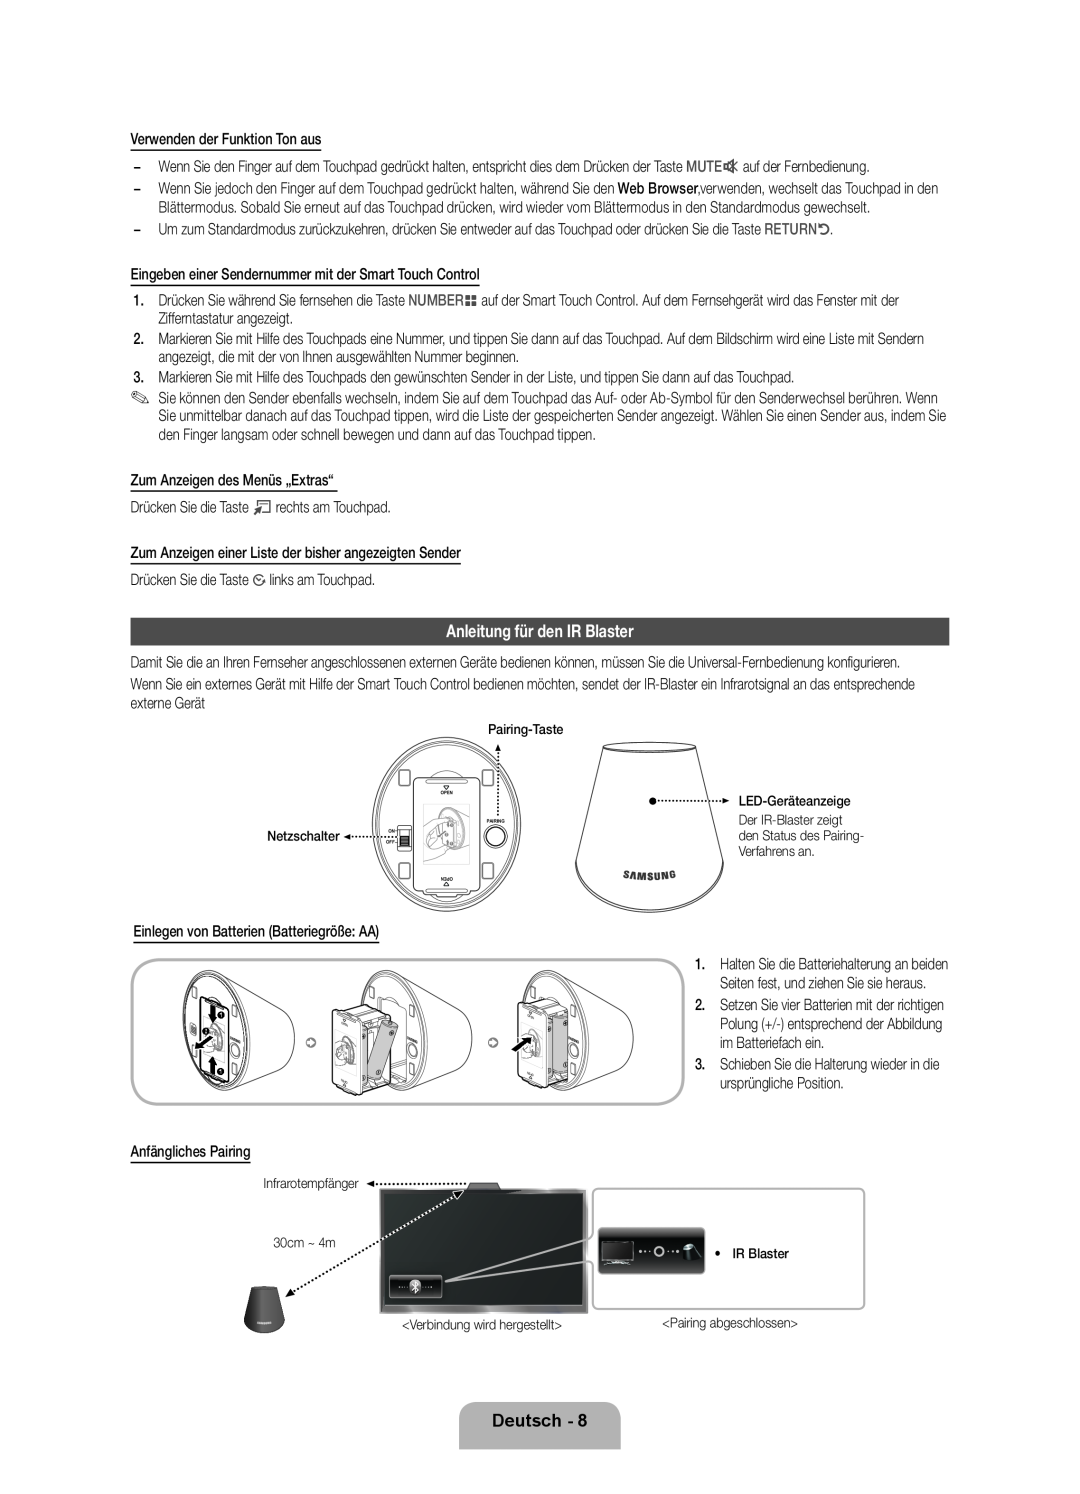 Samsung UE40D7090LSXZG, UE46D7090LSXZG manual Anleitung für den IR Blaster, Deutsch, Einlegen von Batterien Batteriegröße AA 